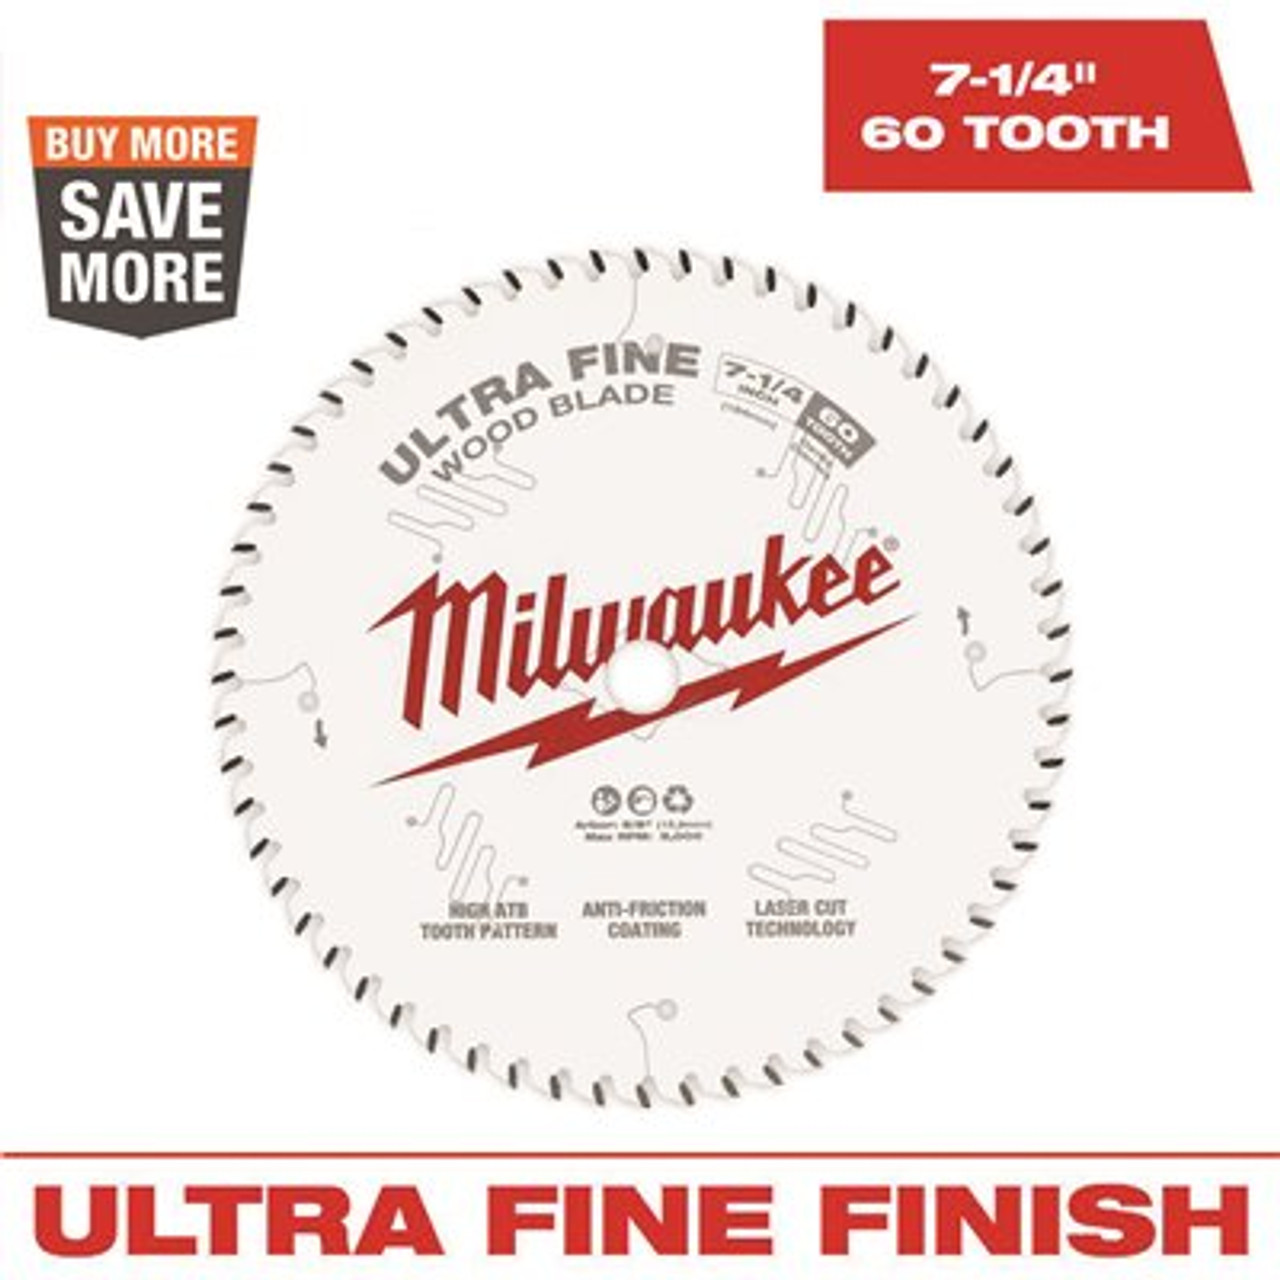 Milwaukee 7-1/4 in. x 60-Tooth Carbide Ultra Fine Finish Circular Saw Blade